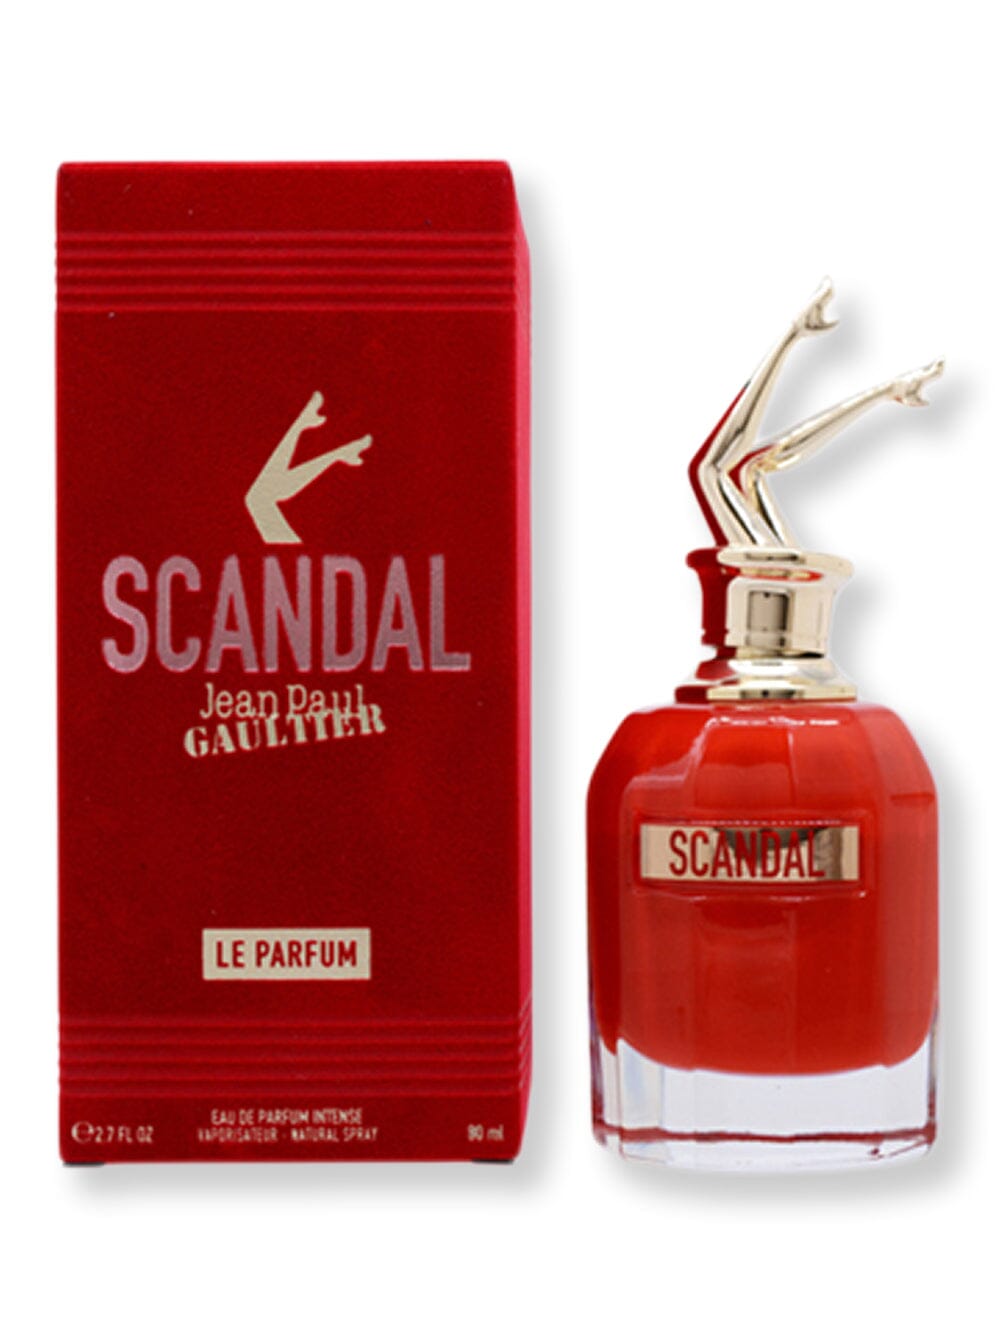 Jean Paul Gaultier Jean Paul Gaultier Scandal Le Parfum EDP Spray Intense 2.7 oz80 ml Perfume 